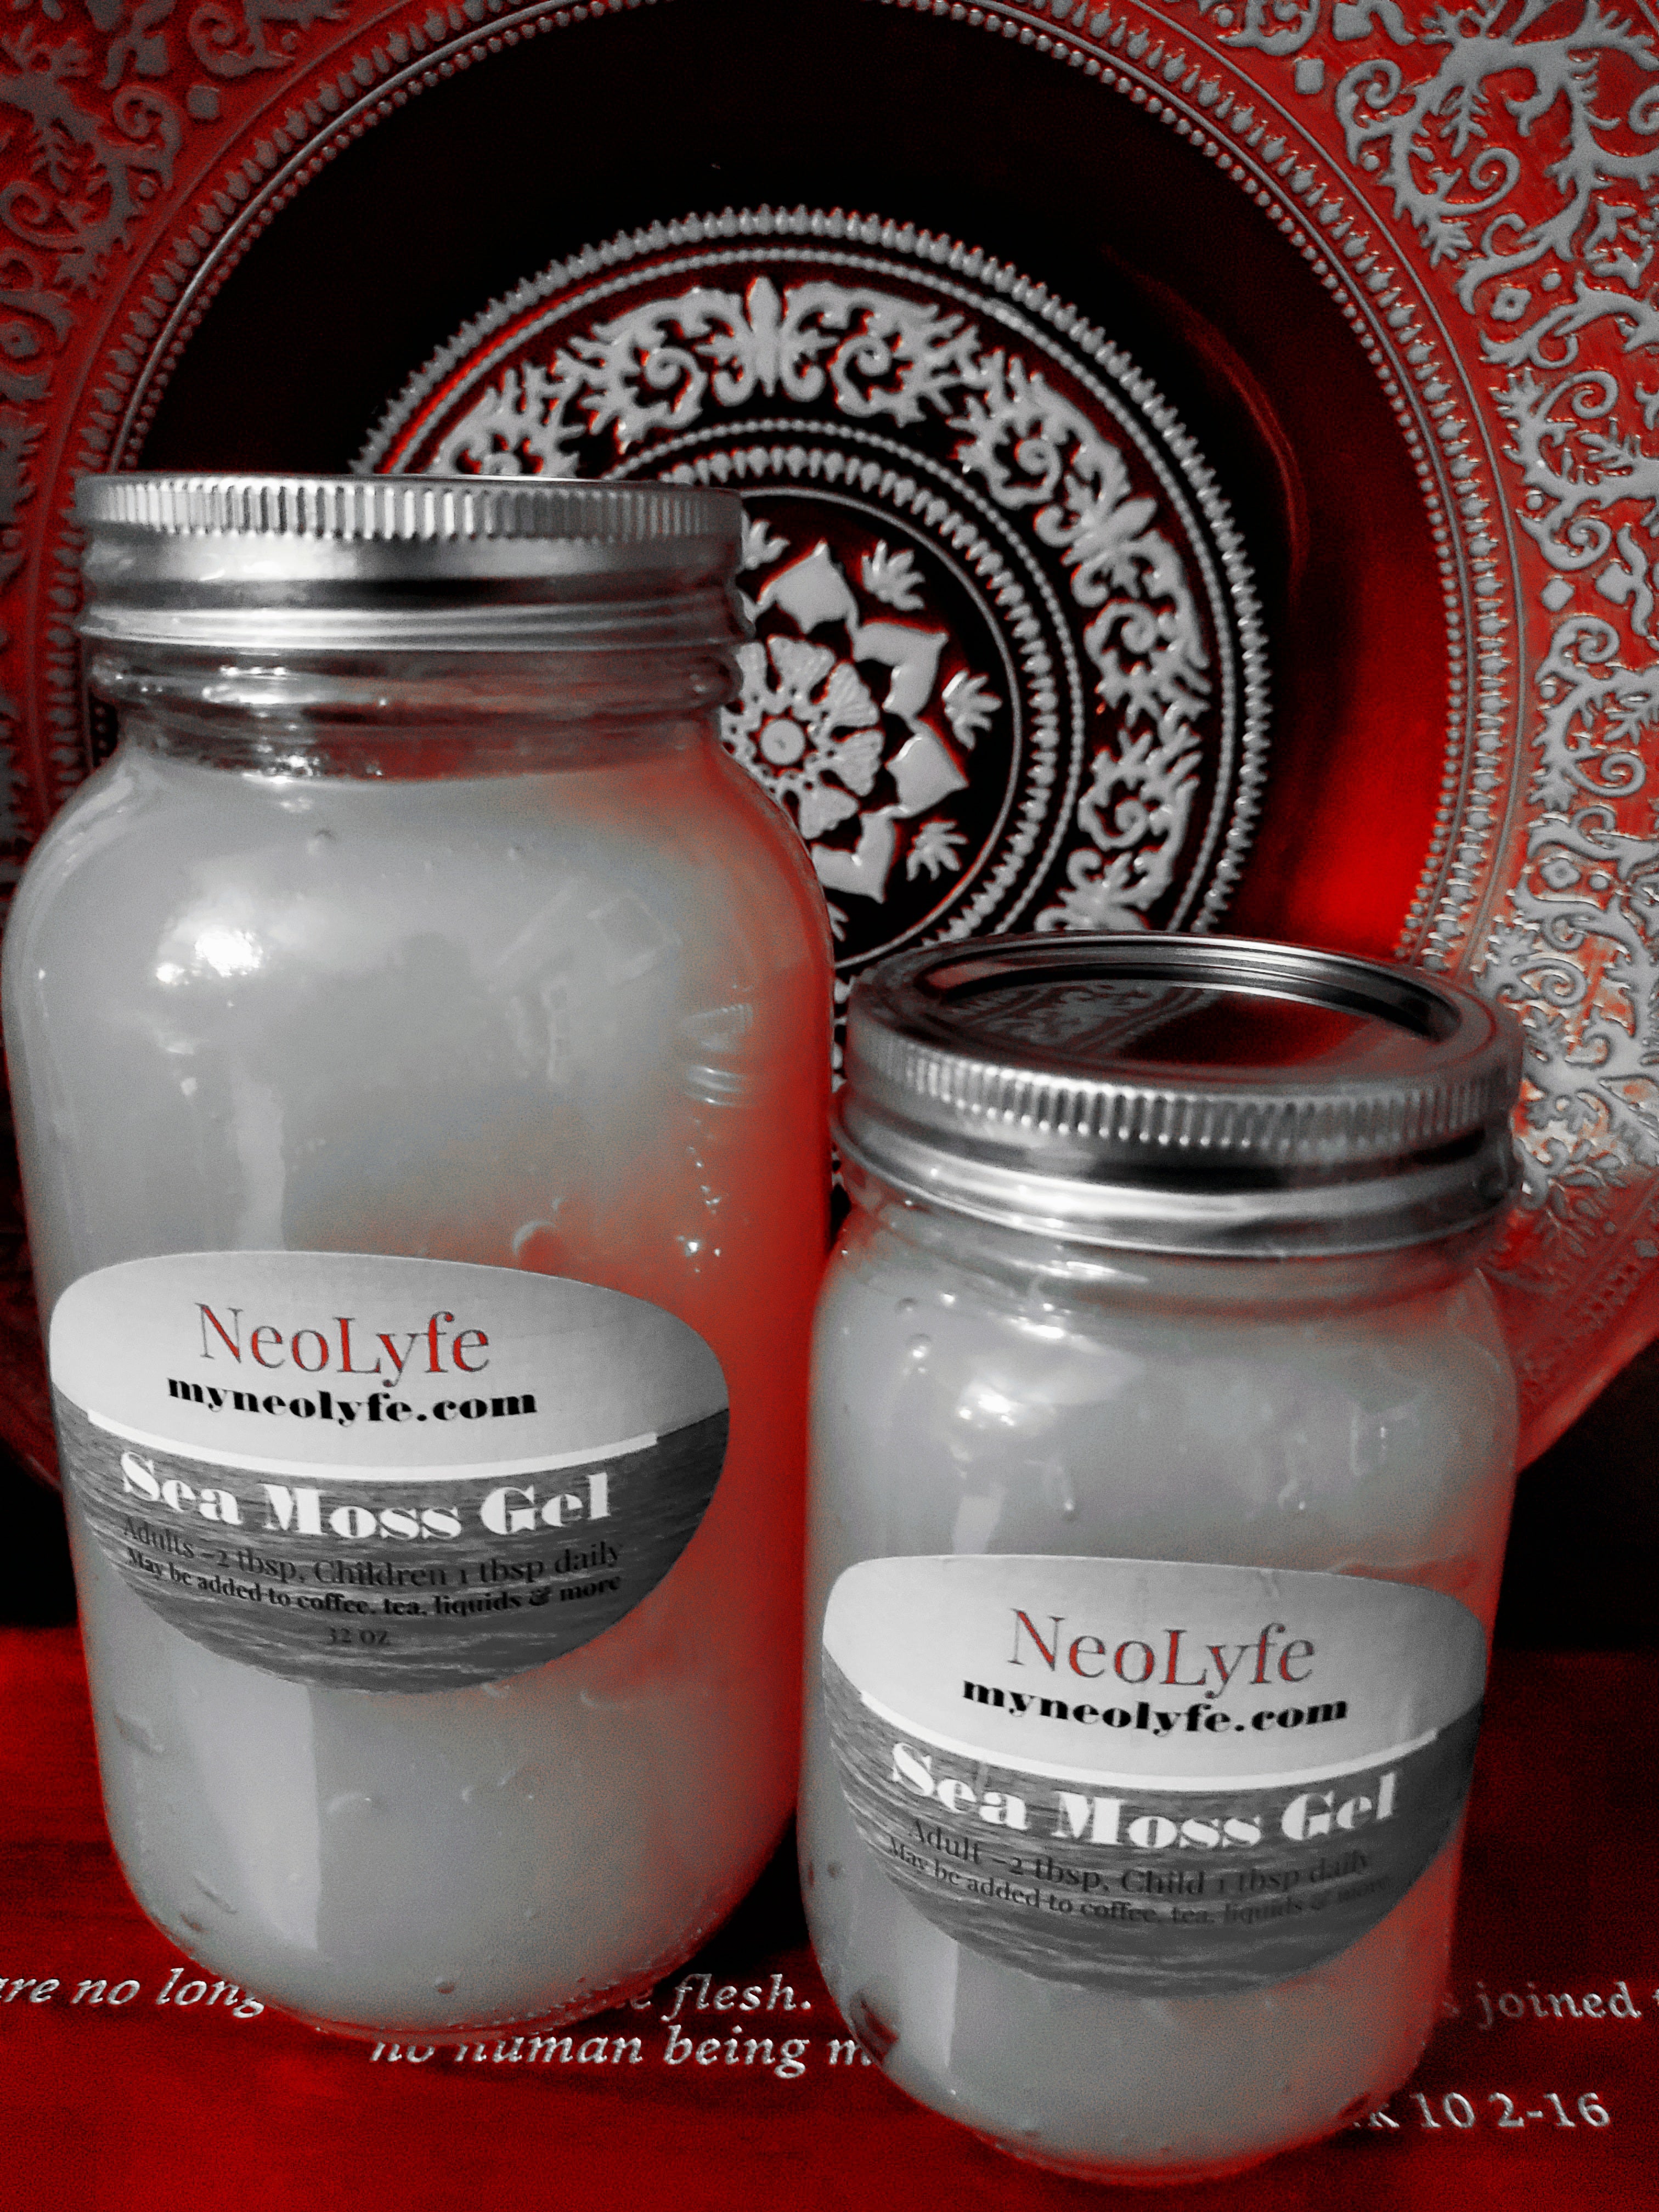 Sea Moss Gel - White Homemade